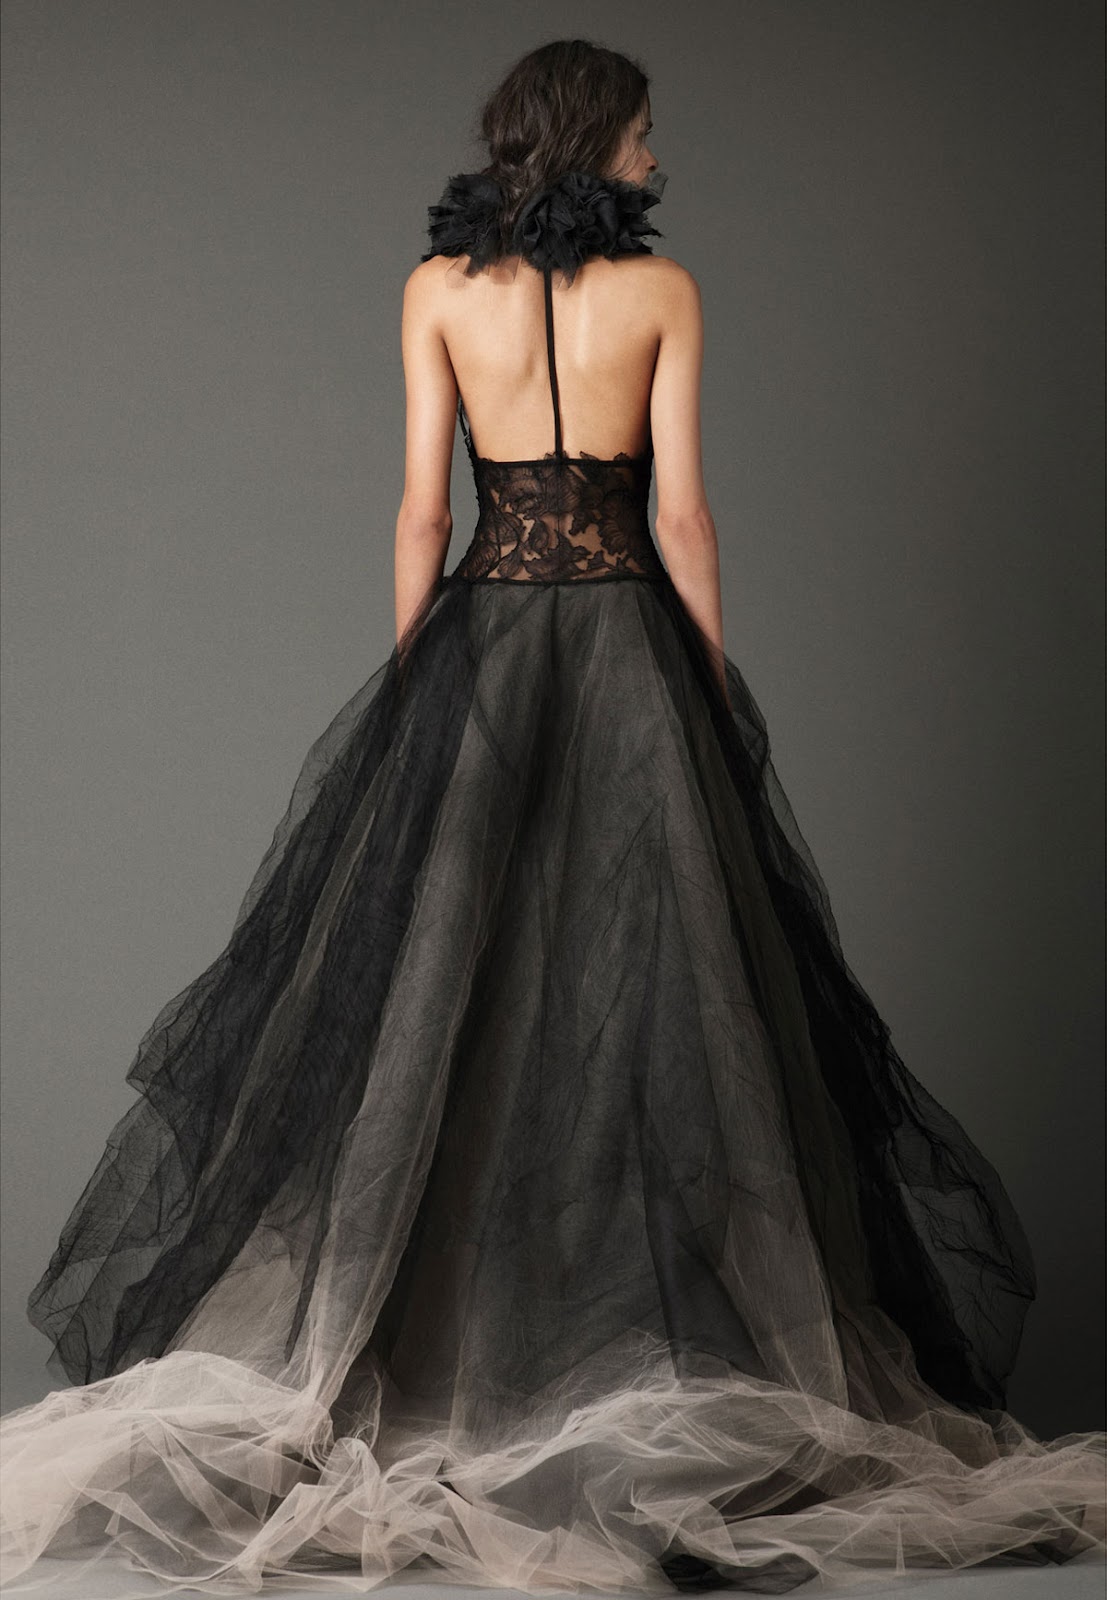 CJNT Wedding Inspirations: Vera Wang Fall 2012 Bridal Gown Collection